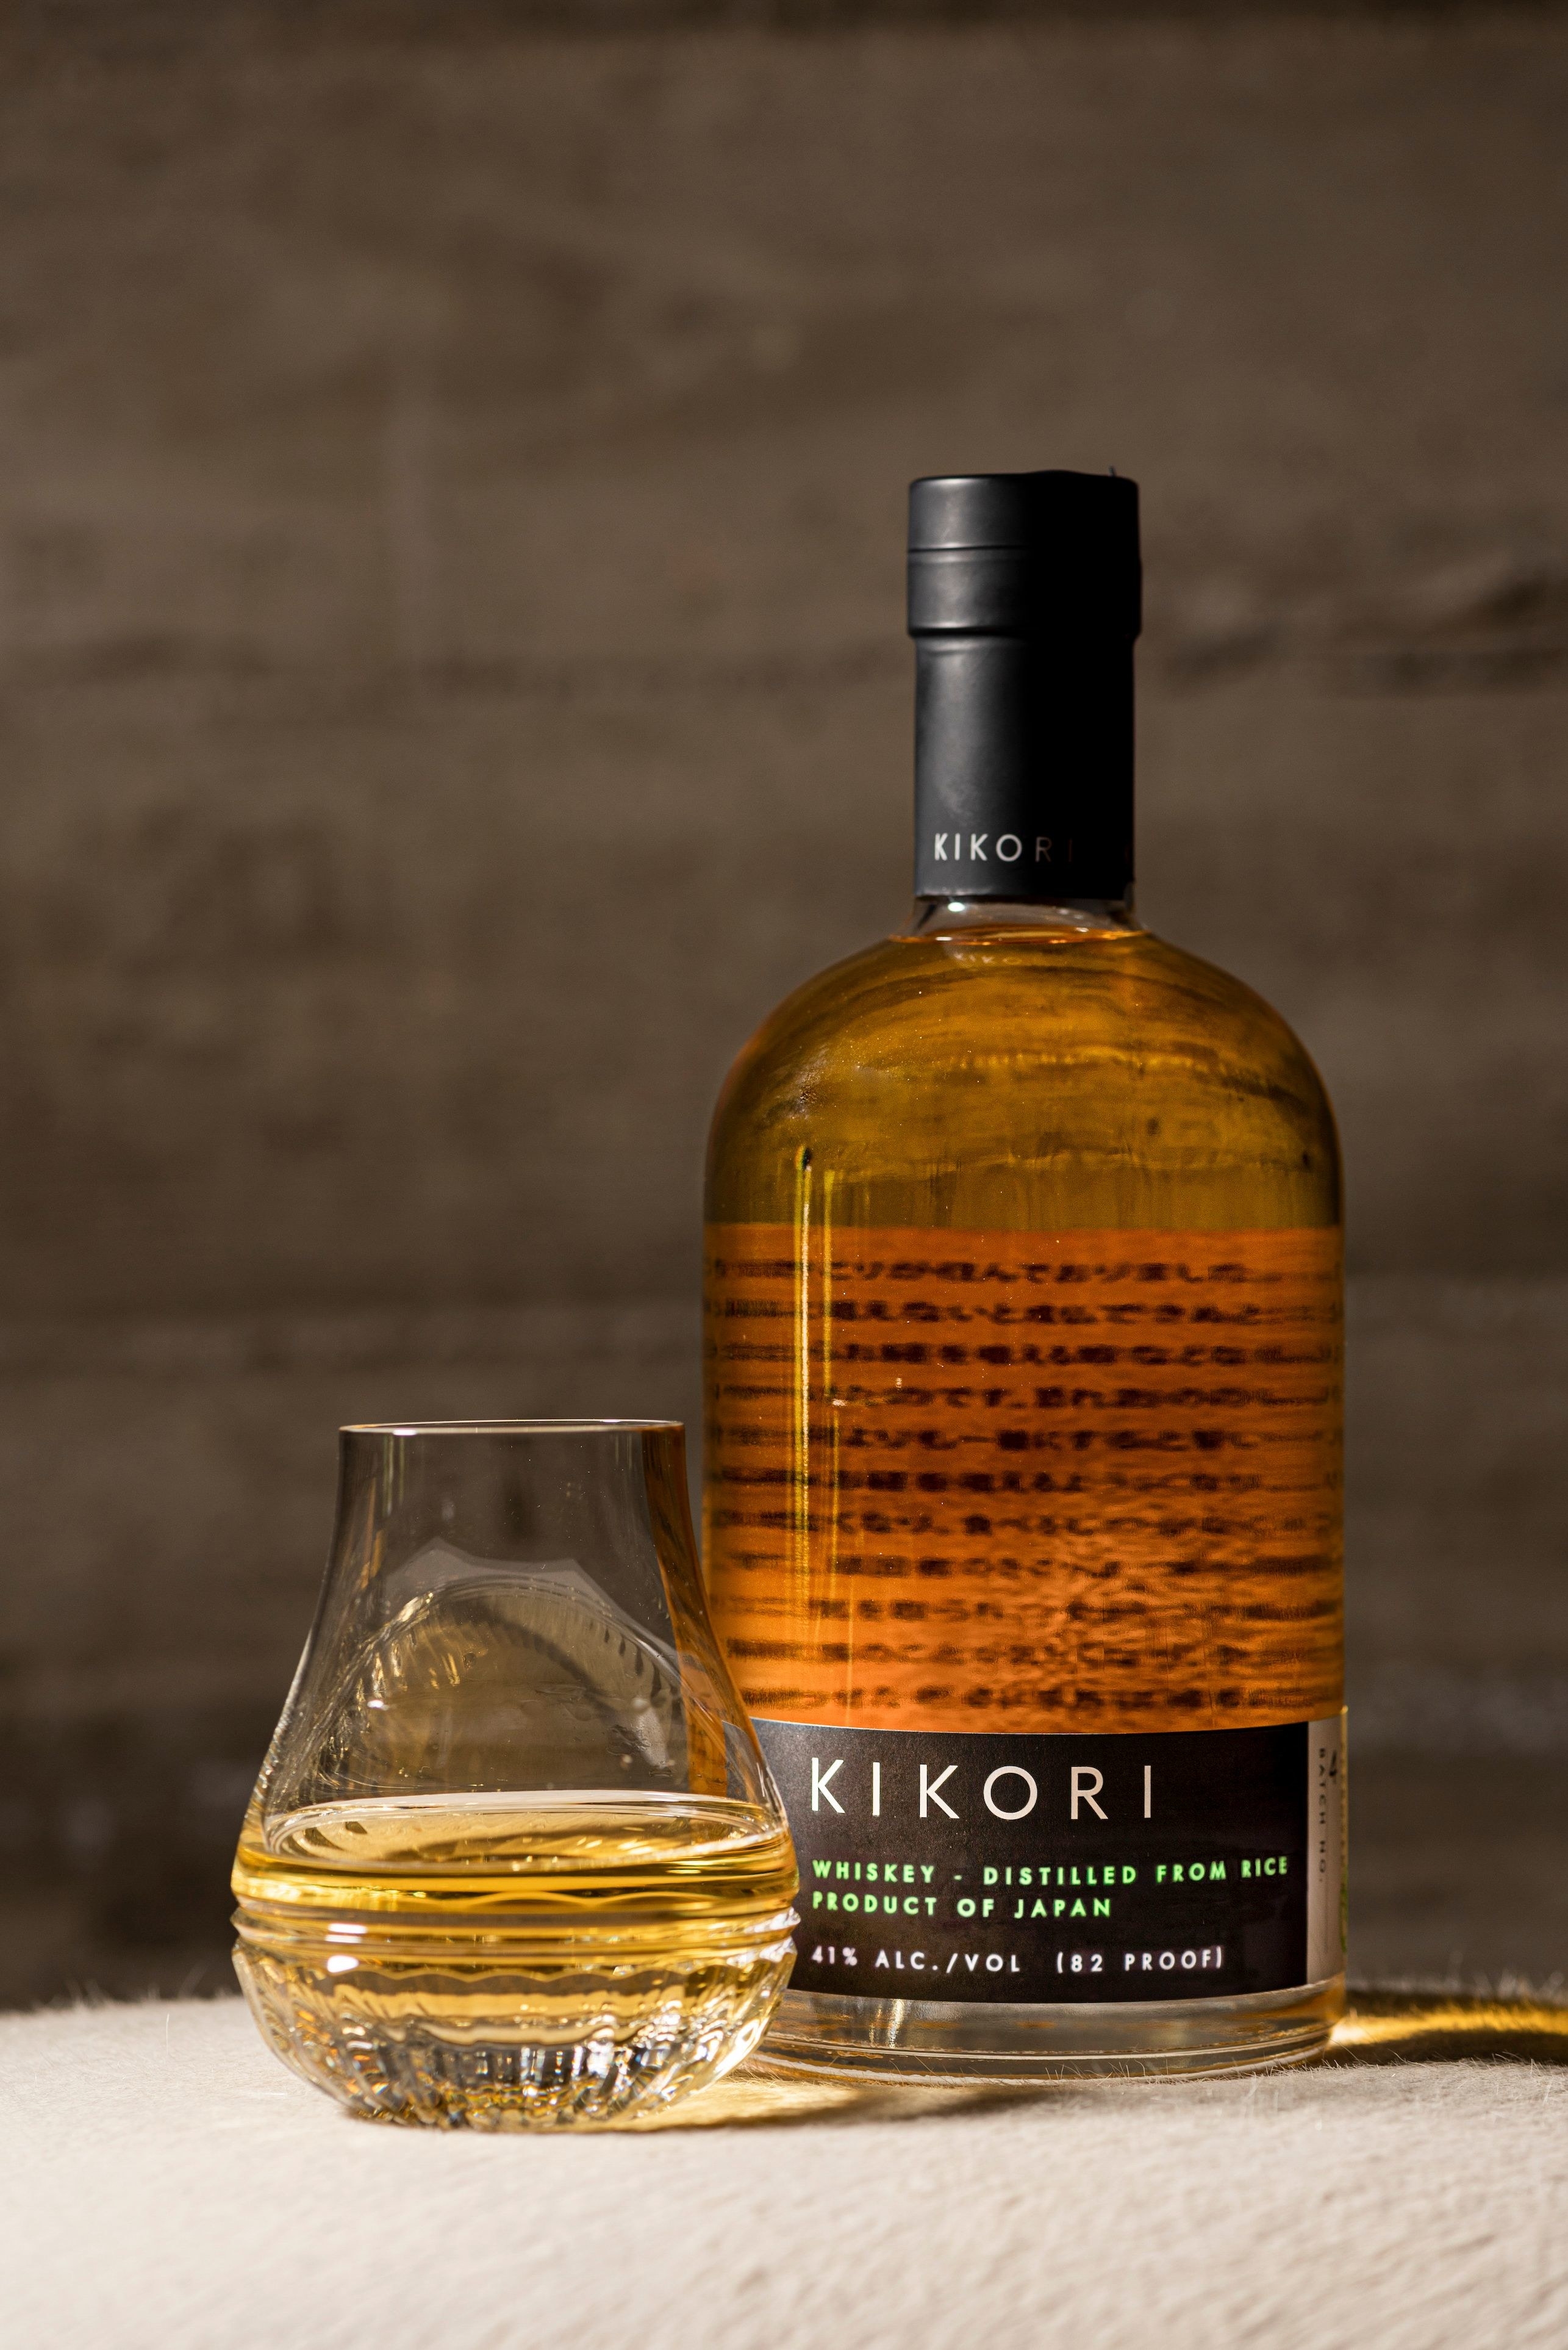 A bottle of Kikori Whiskey next to a glass containing the whiskey